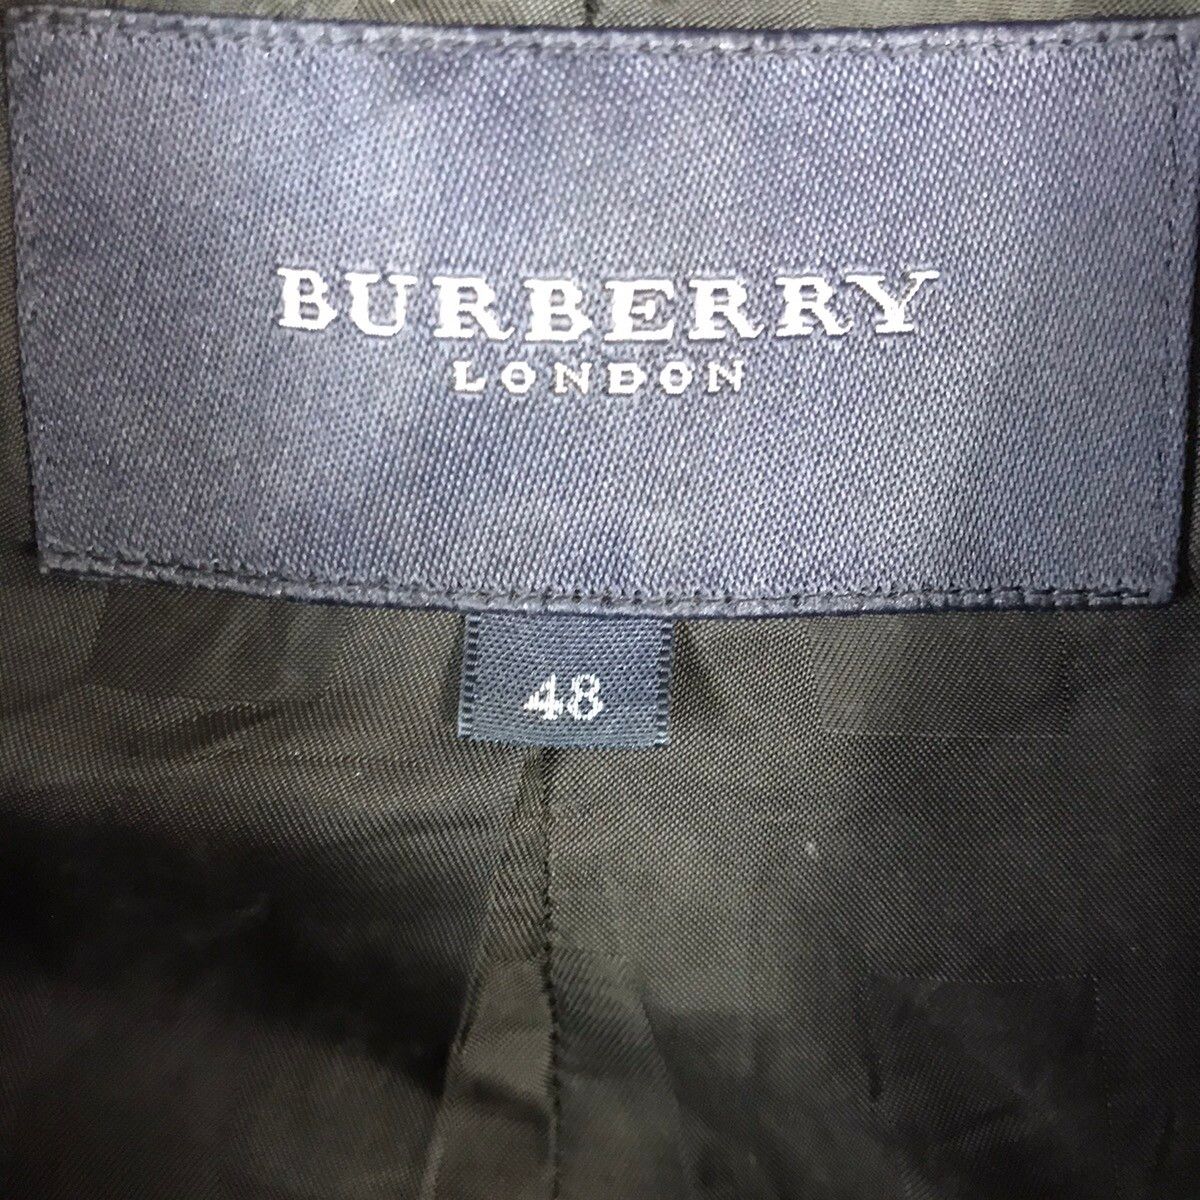 Vintage Burberry London Blazer size 48 - 2